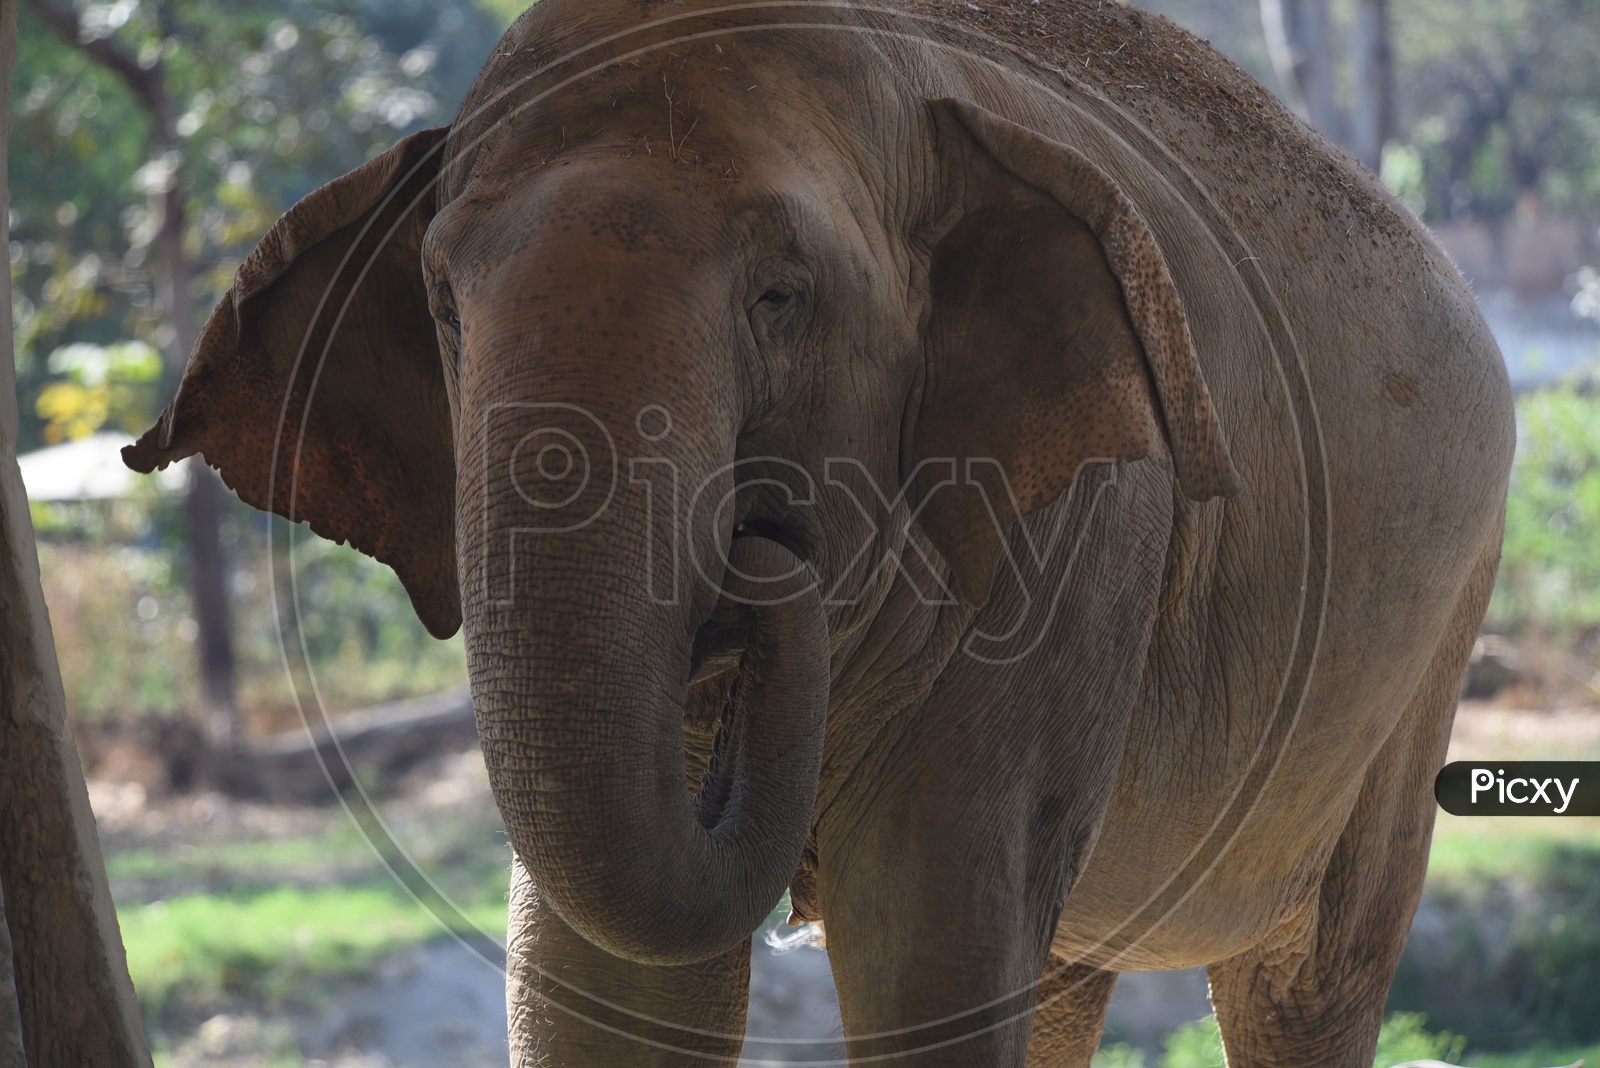 Elephant in Delhi Zoo